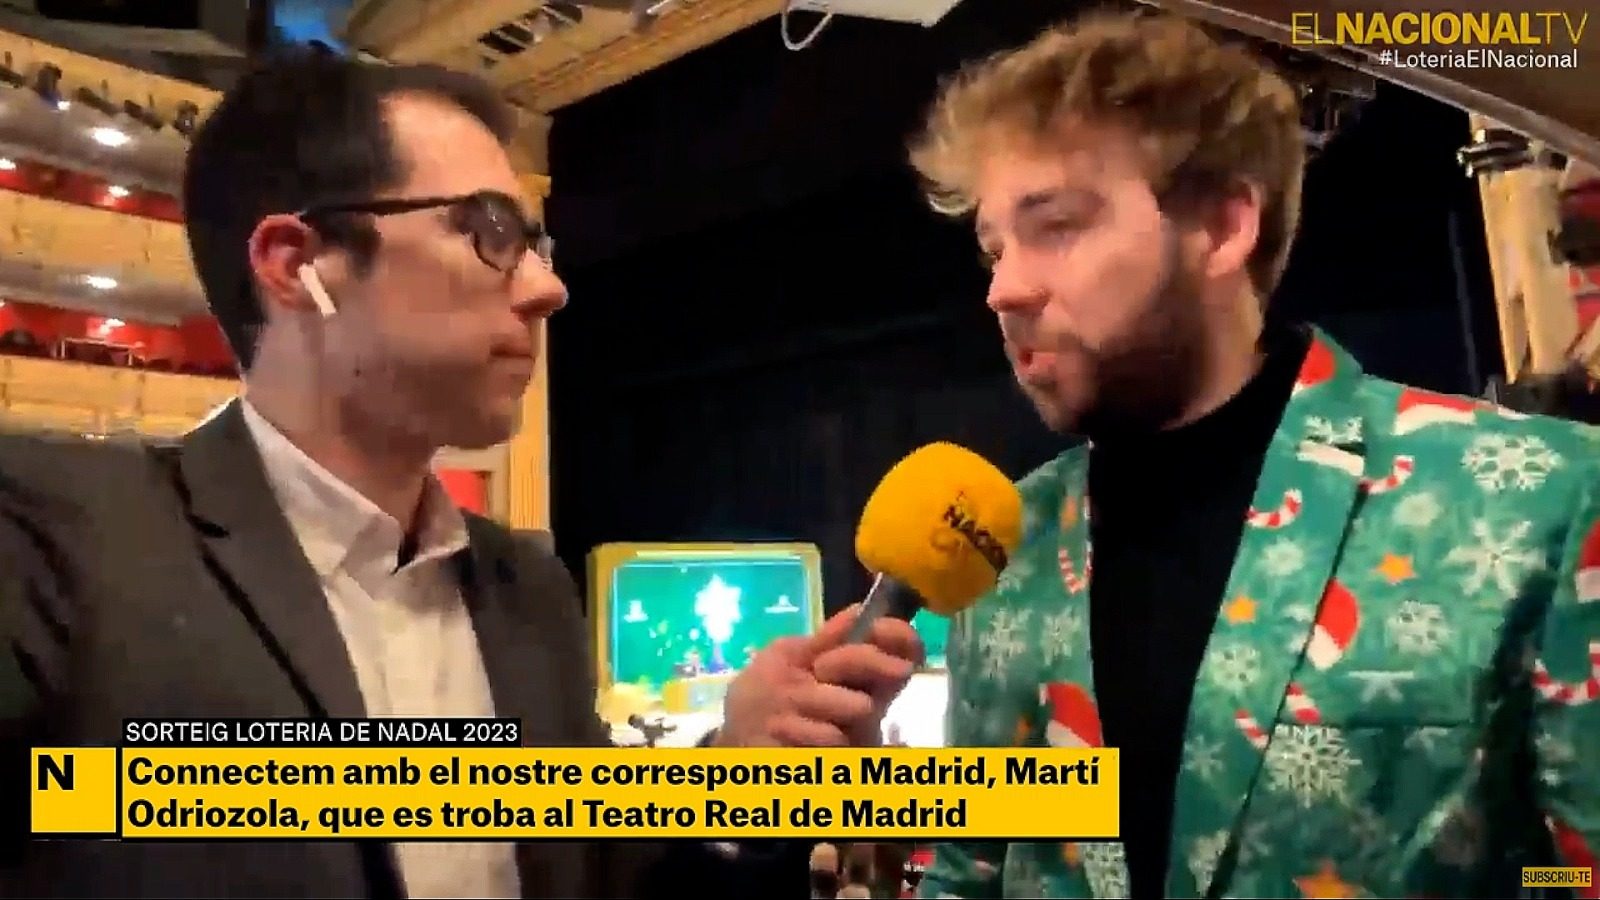 El corresponsal a Madrid d'El Nacional, en directe al sorteig de Nadal des de dins del Teatro Real